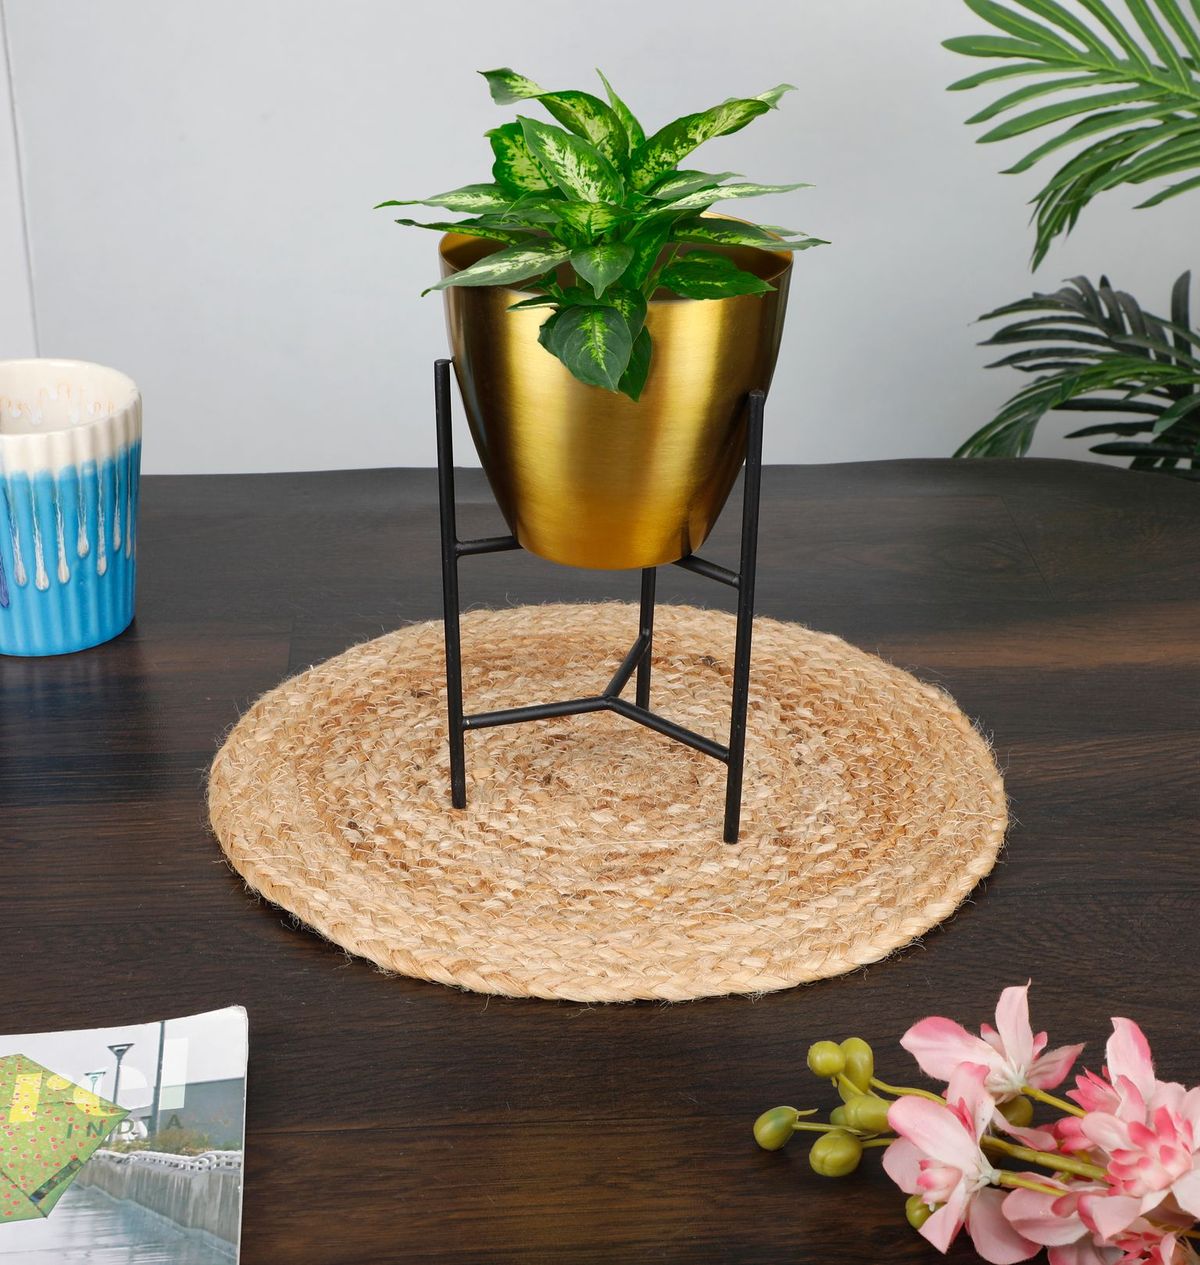 Steps Indoor Desk Metal Planter Pot With Stand